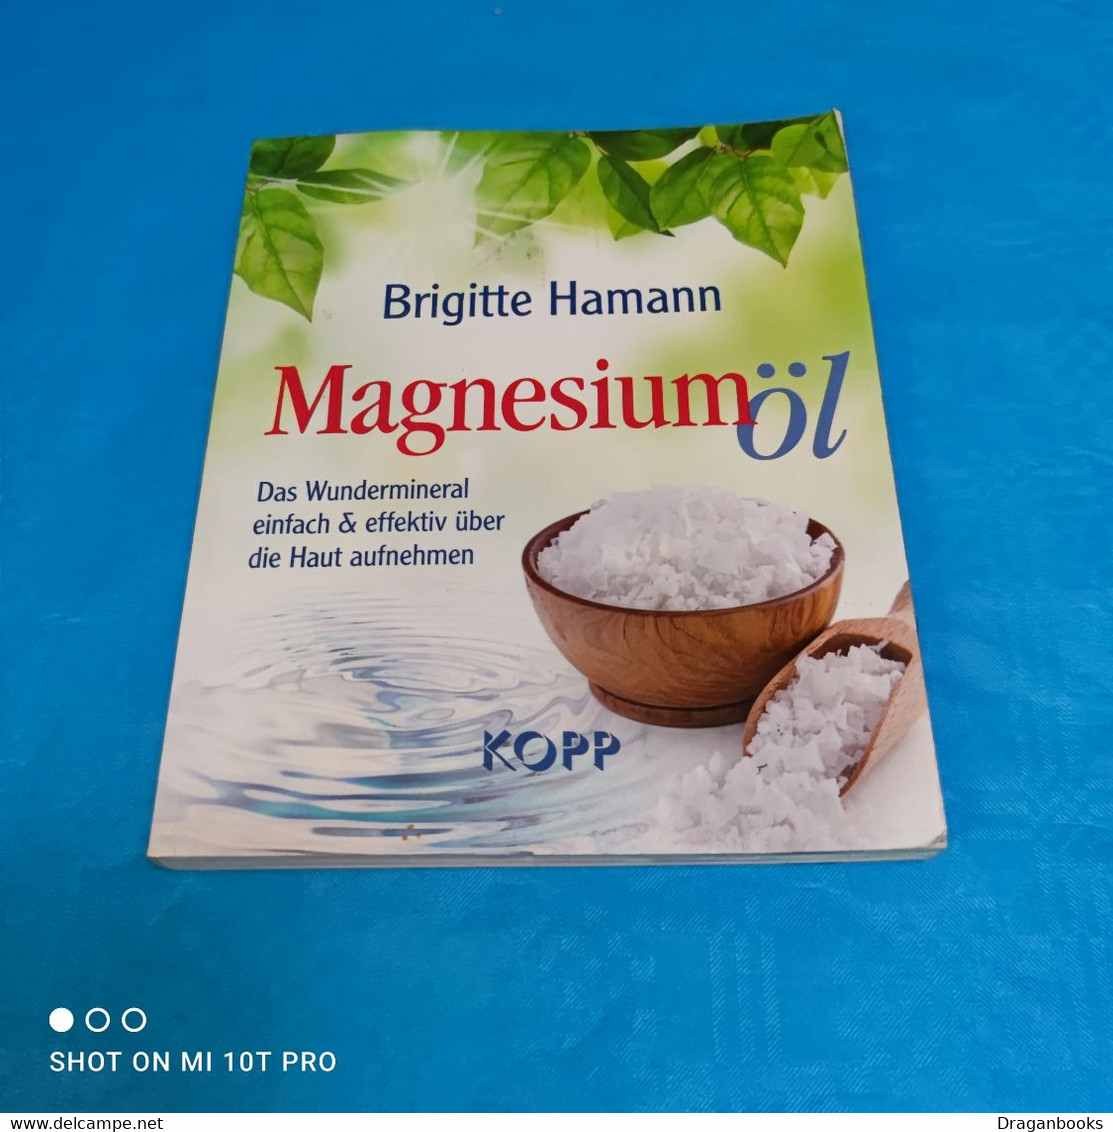 Brigitte Hamann - Magnesium Öl - Medizin & Gesundheit